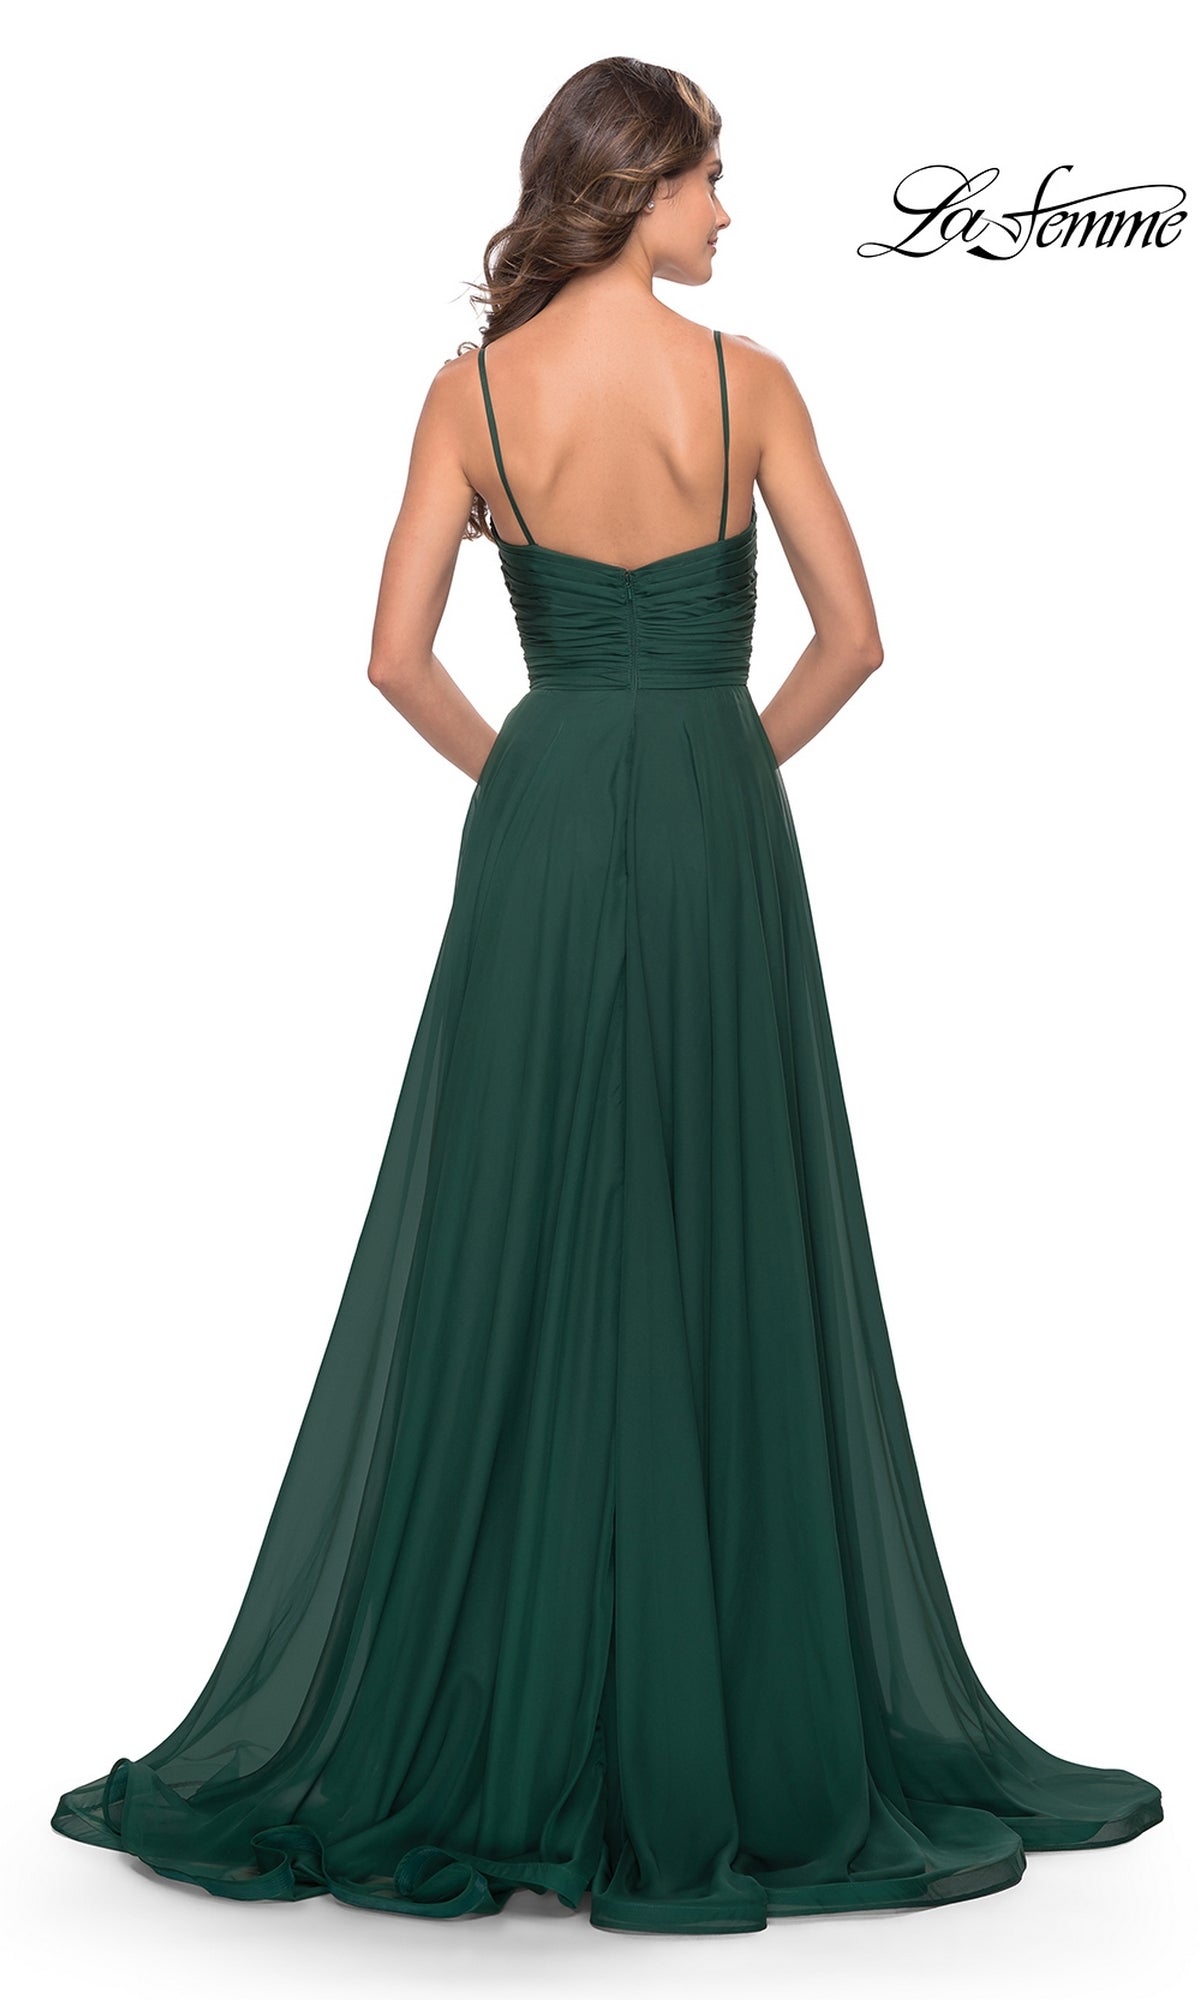  La Femme 31500 Formal Prom Dress